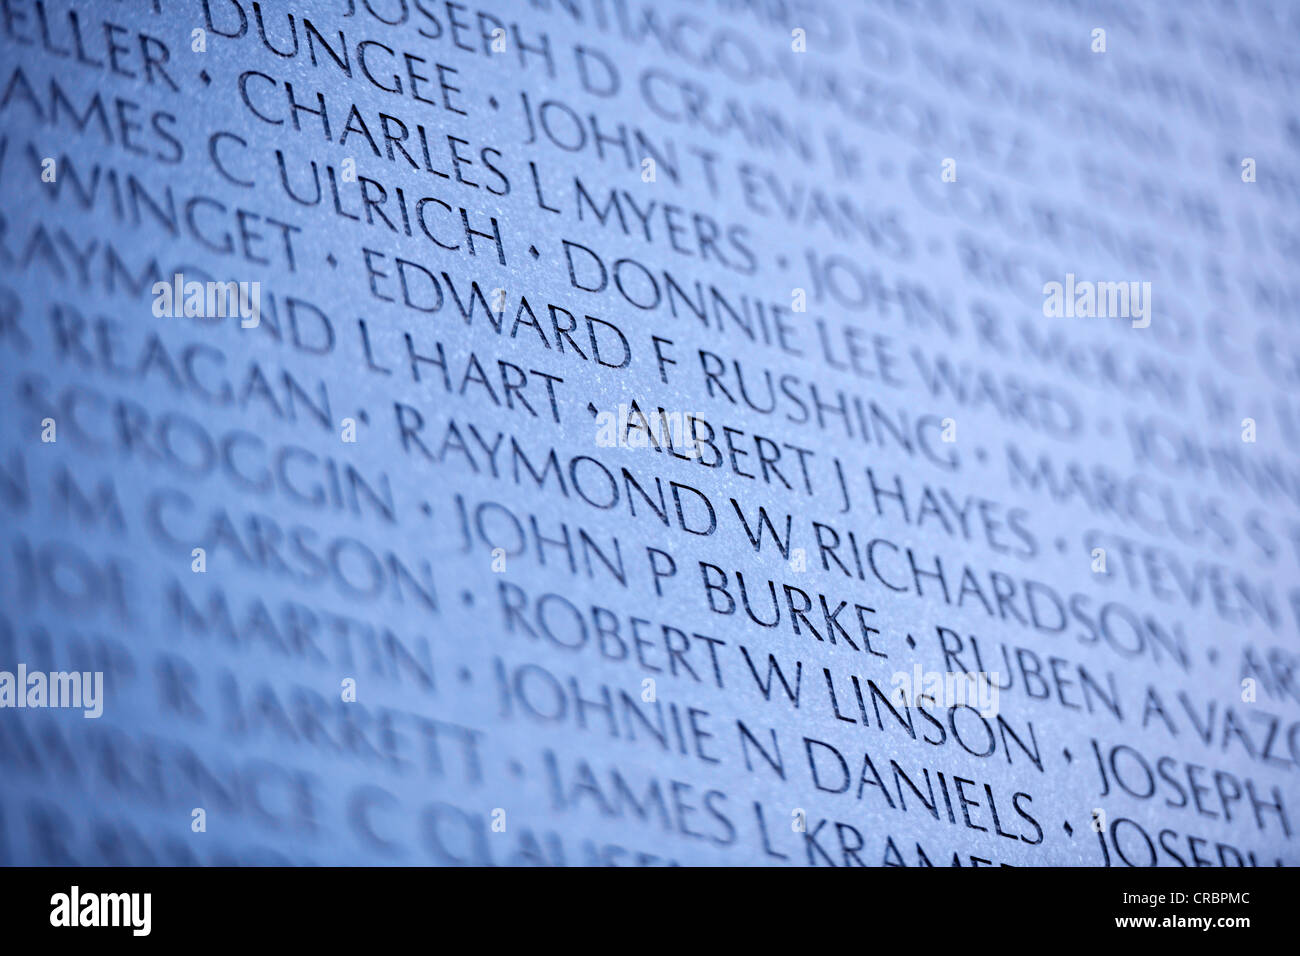 Vietnam Veterans Memorial Wall, national memorial avec les noms des soldats américains tombés lors de la guerre du Vietnam, Washington DC Banque D'Images